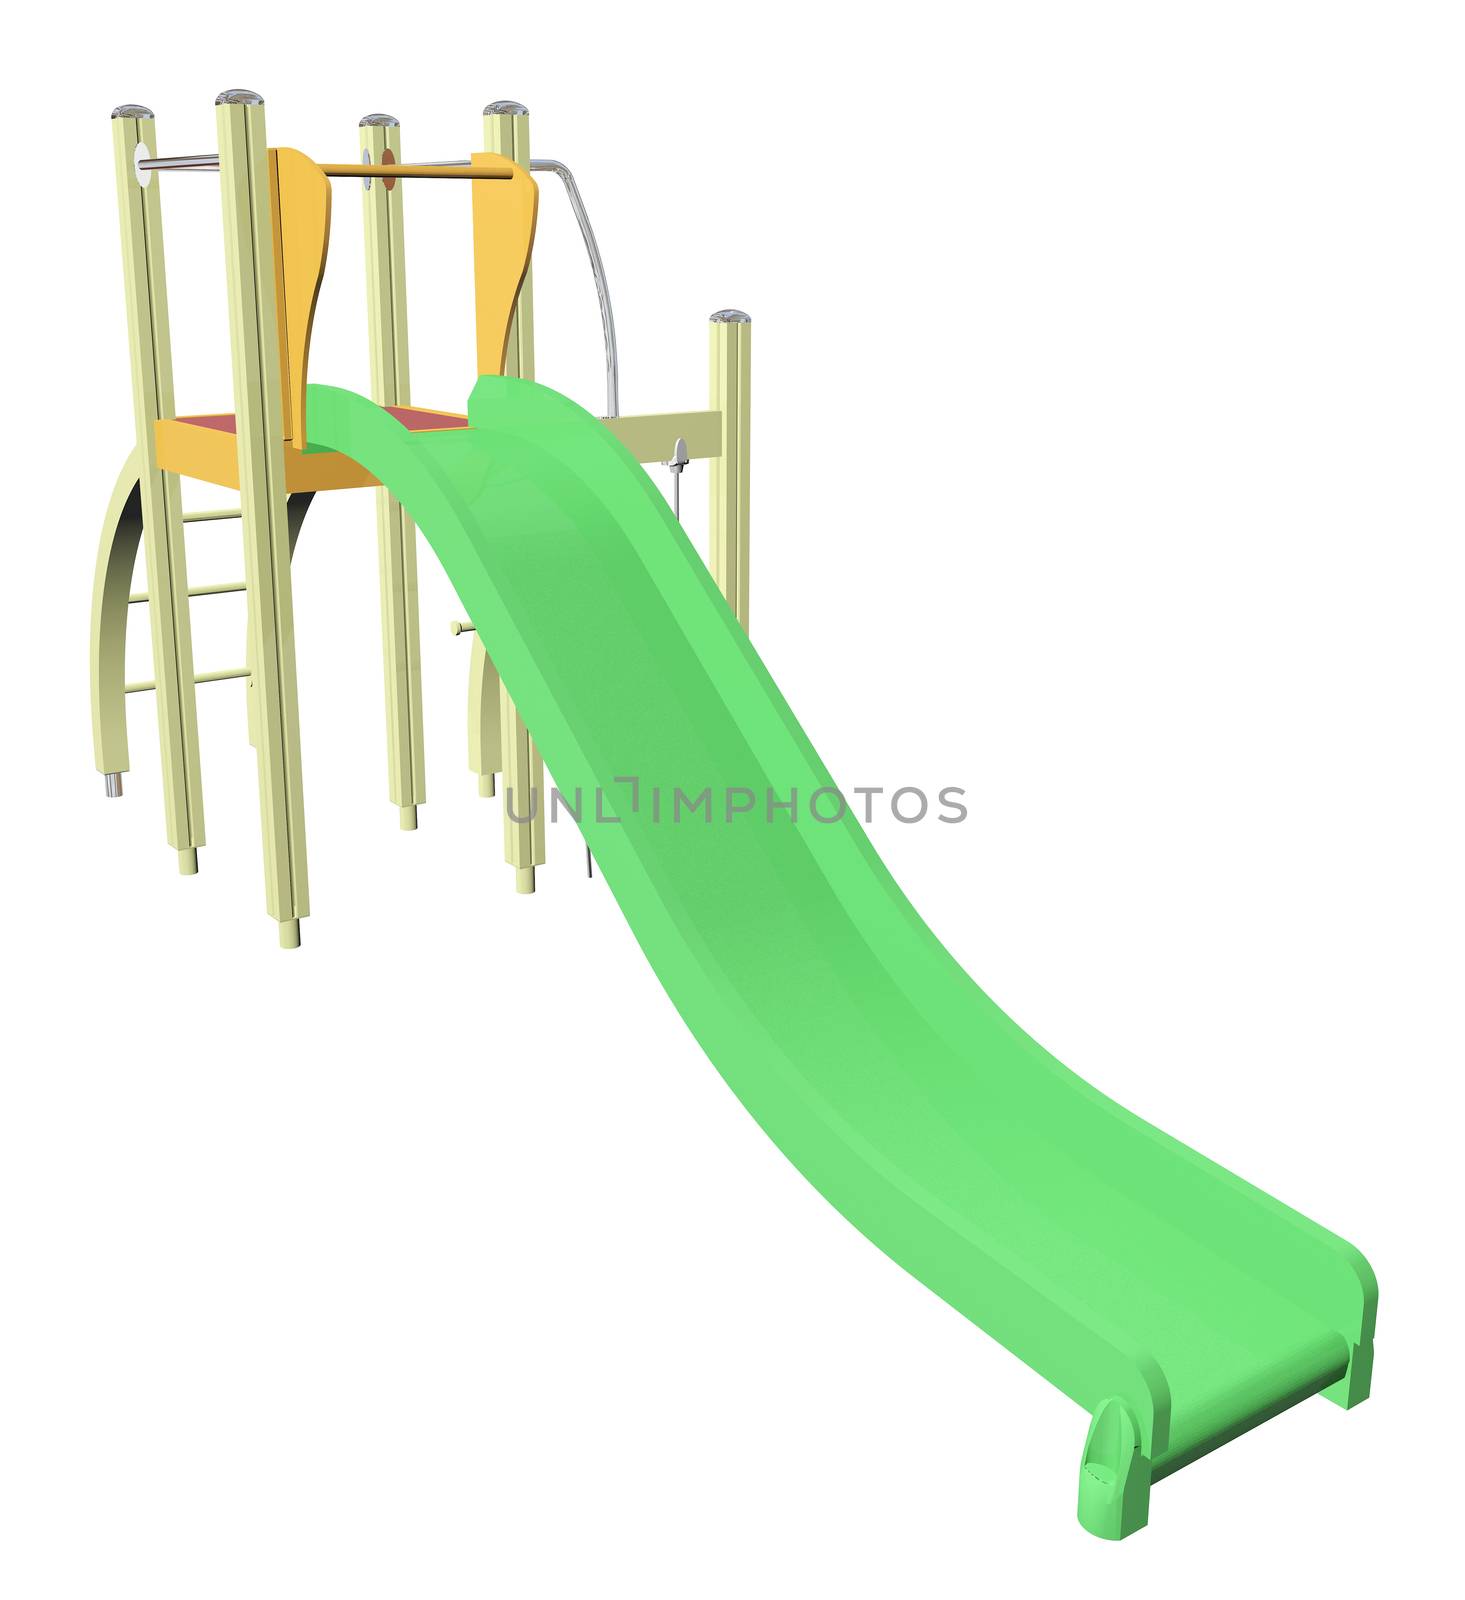 Kiddie slide, green, 3D  illustration, isolated against a white baackground